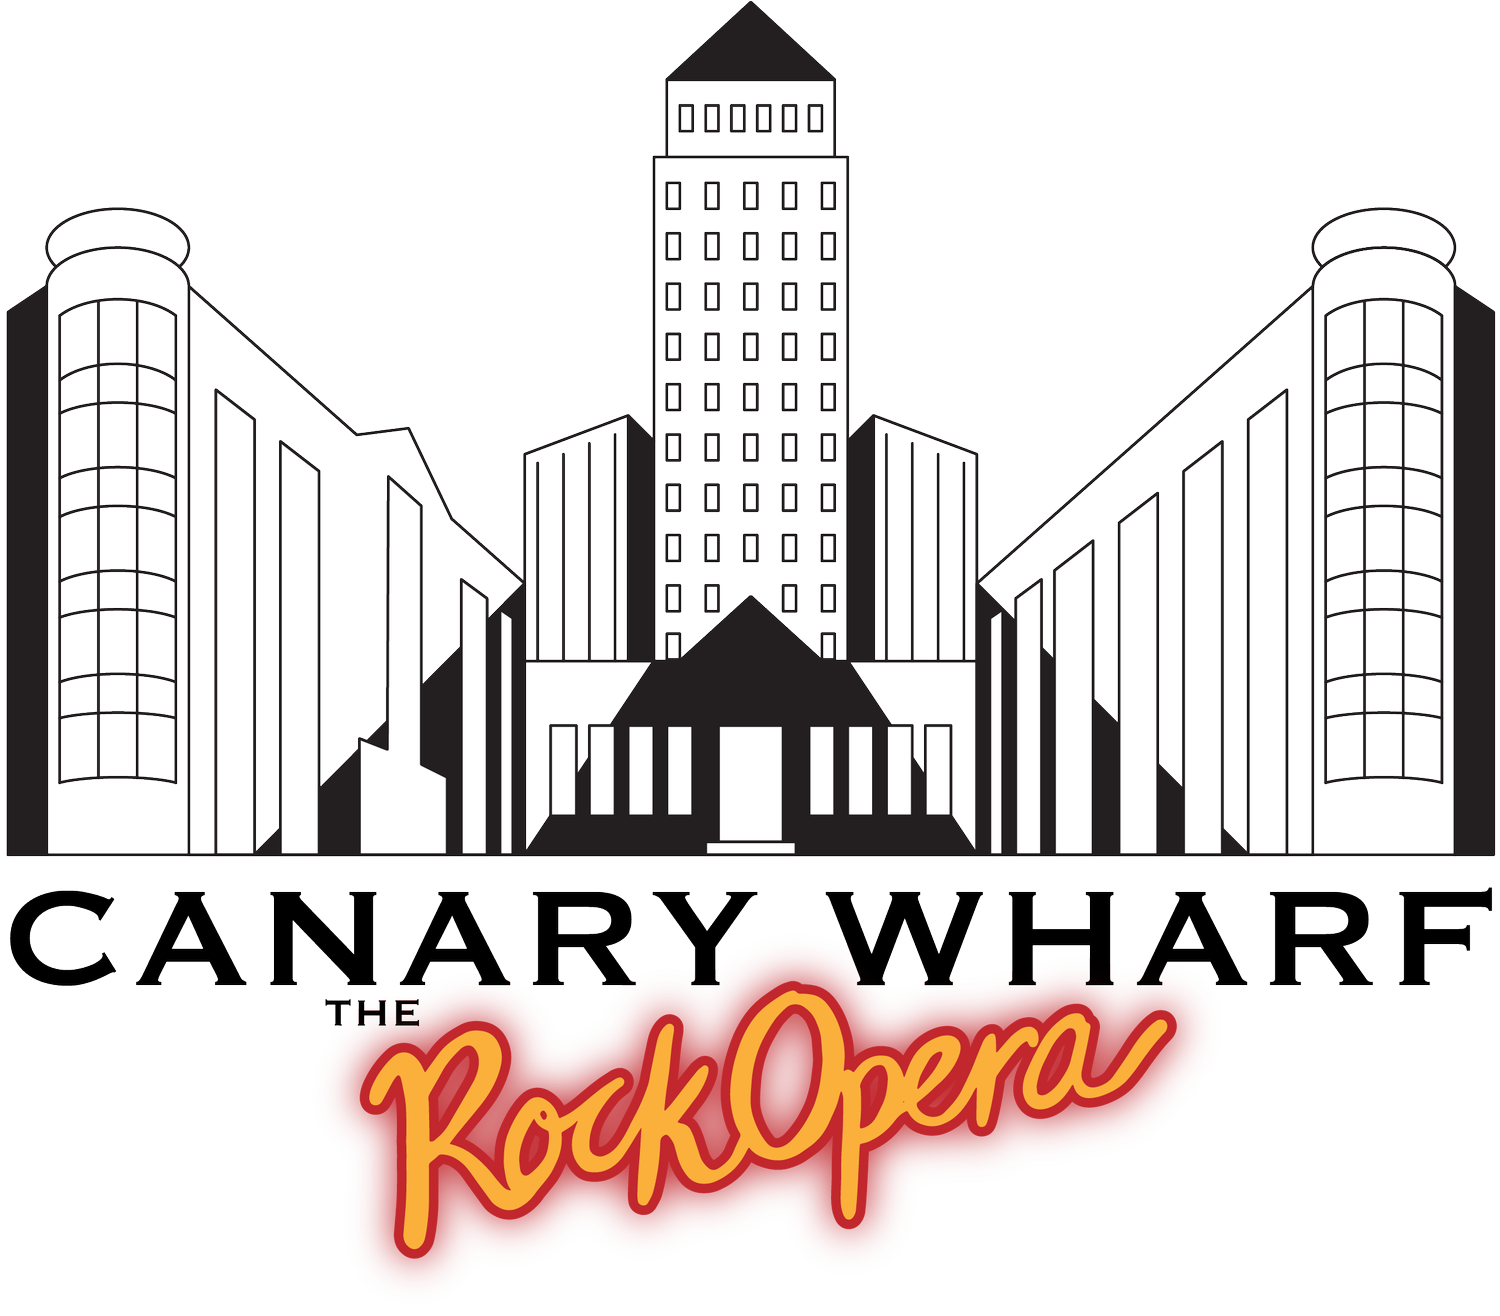 Canary Wharf: the rock opera